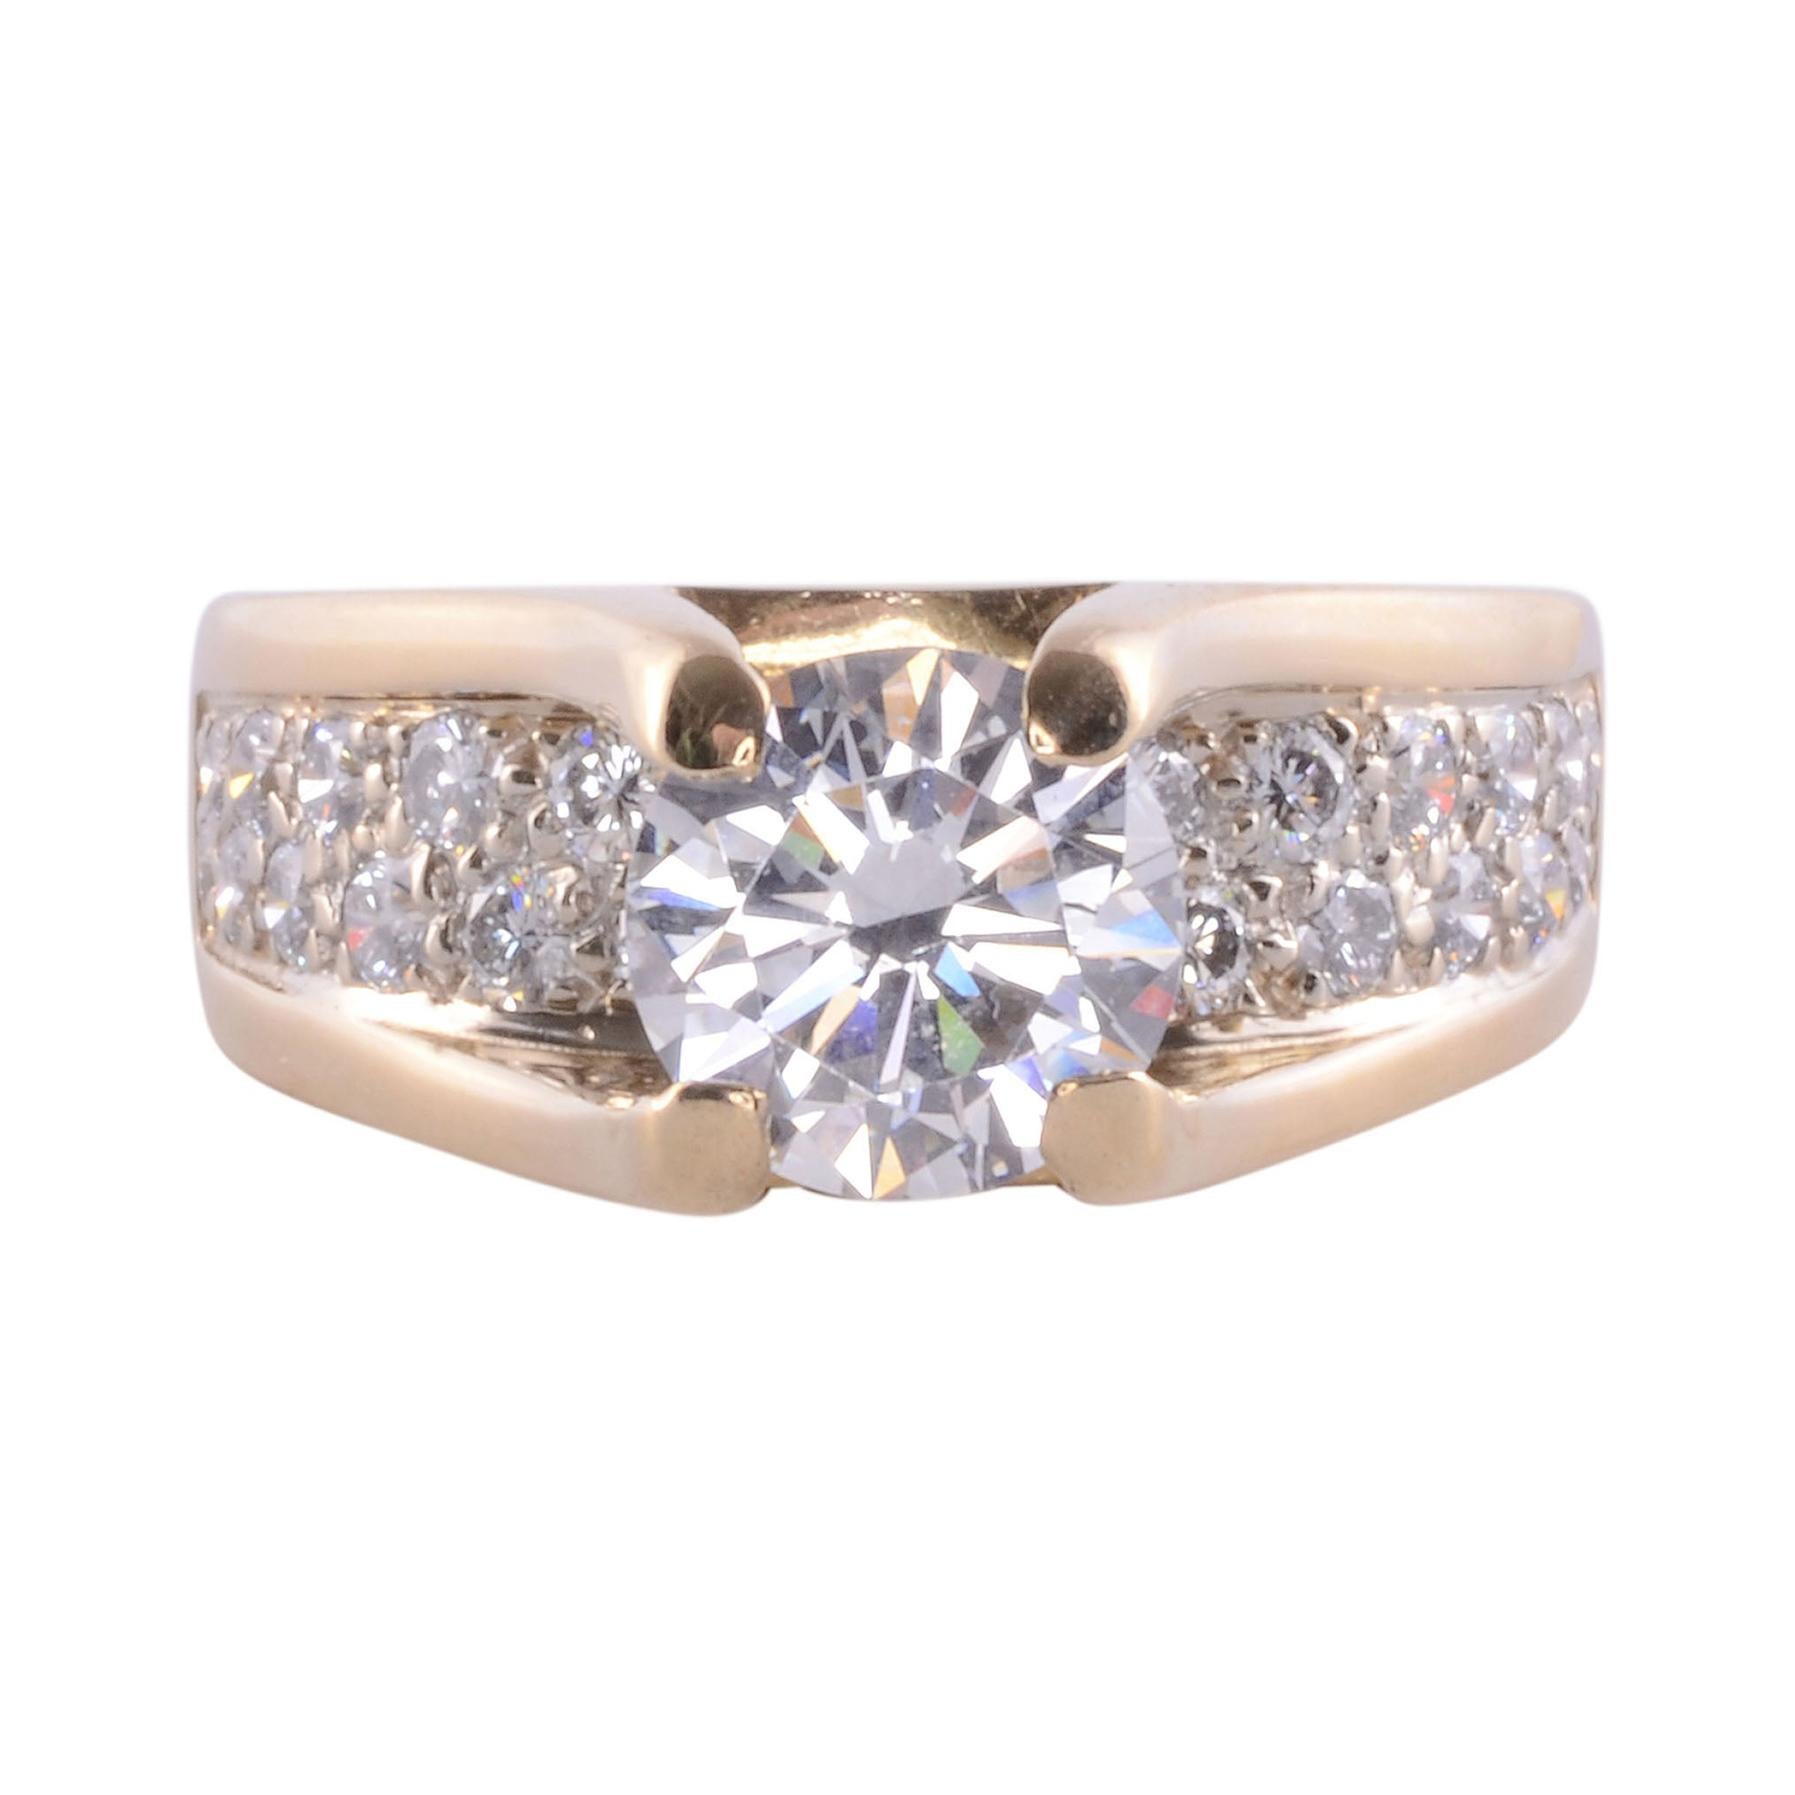 1.52 Carat VS2 Center Diamond Ring For Sale